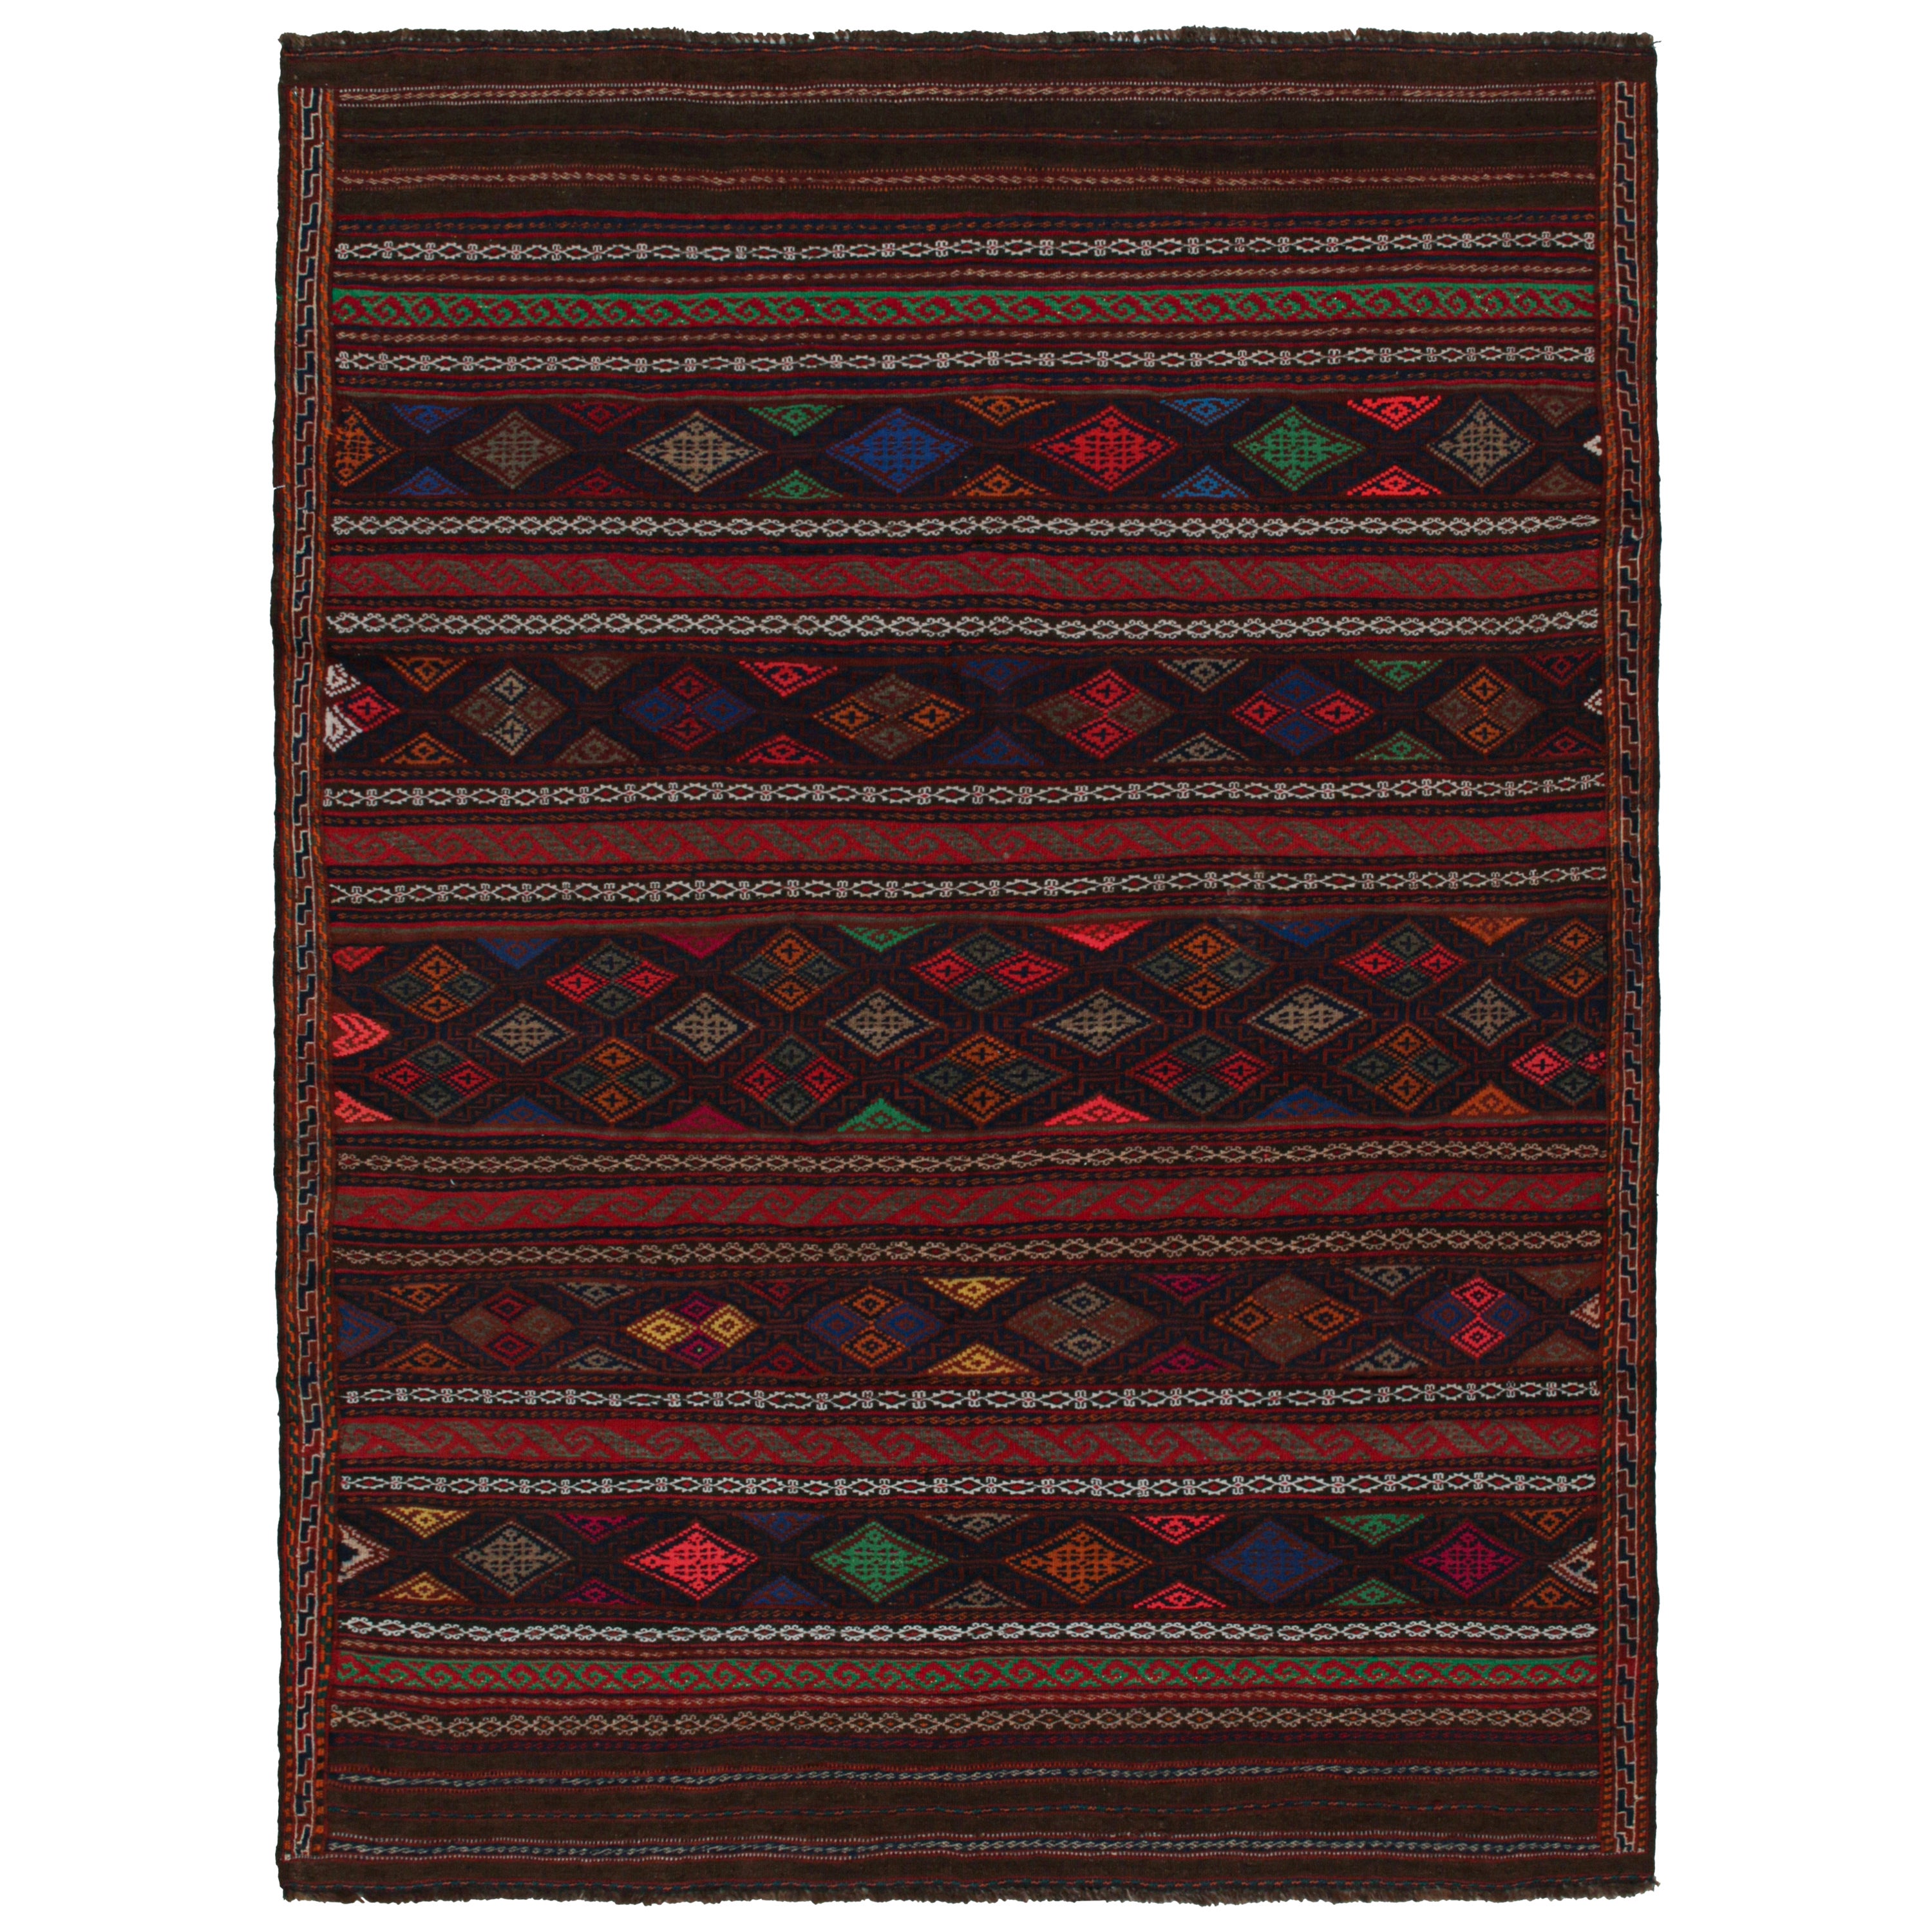 Vintage Baluch Tribal Kilim in Brown with Geometric Patterns by Rug & Kilim